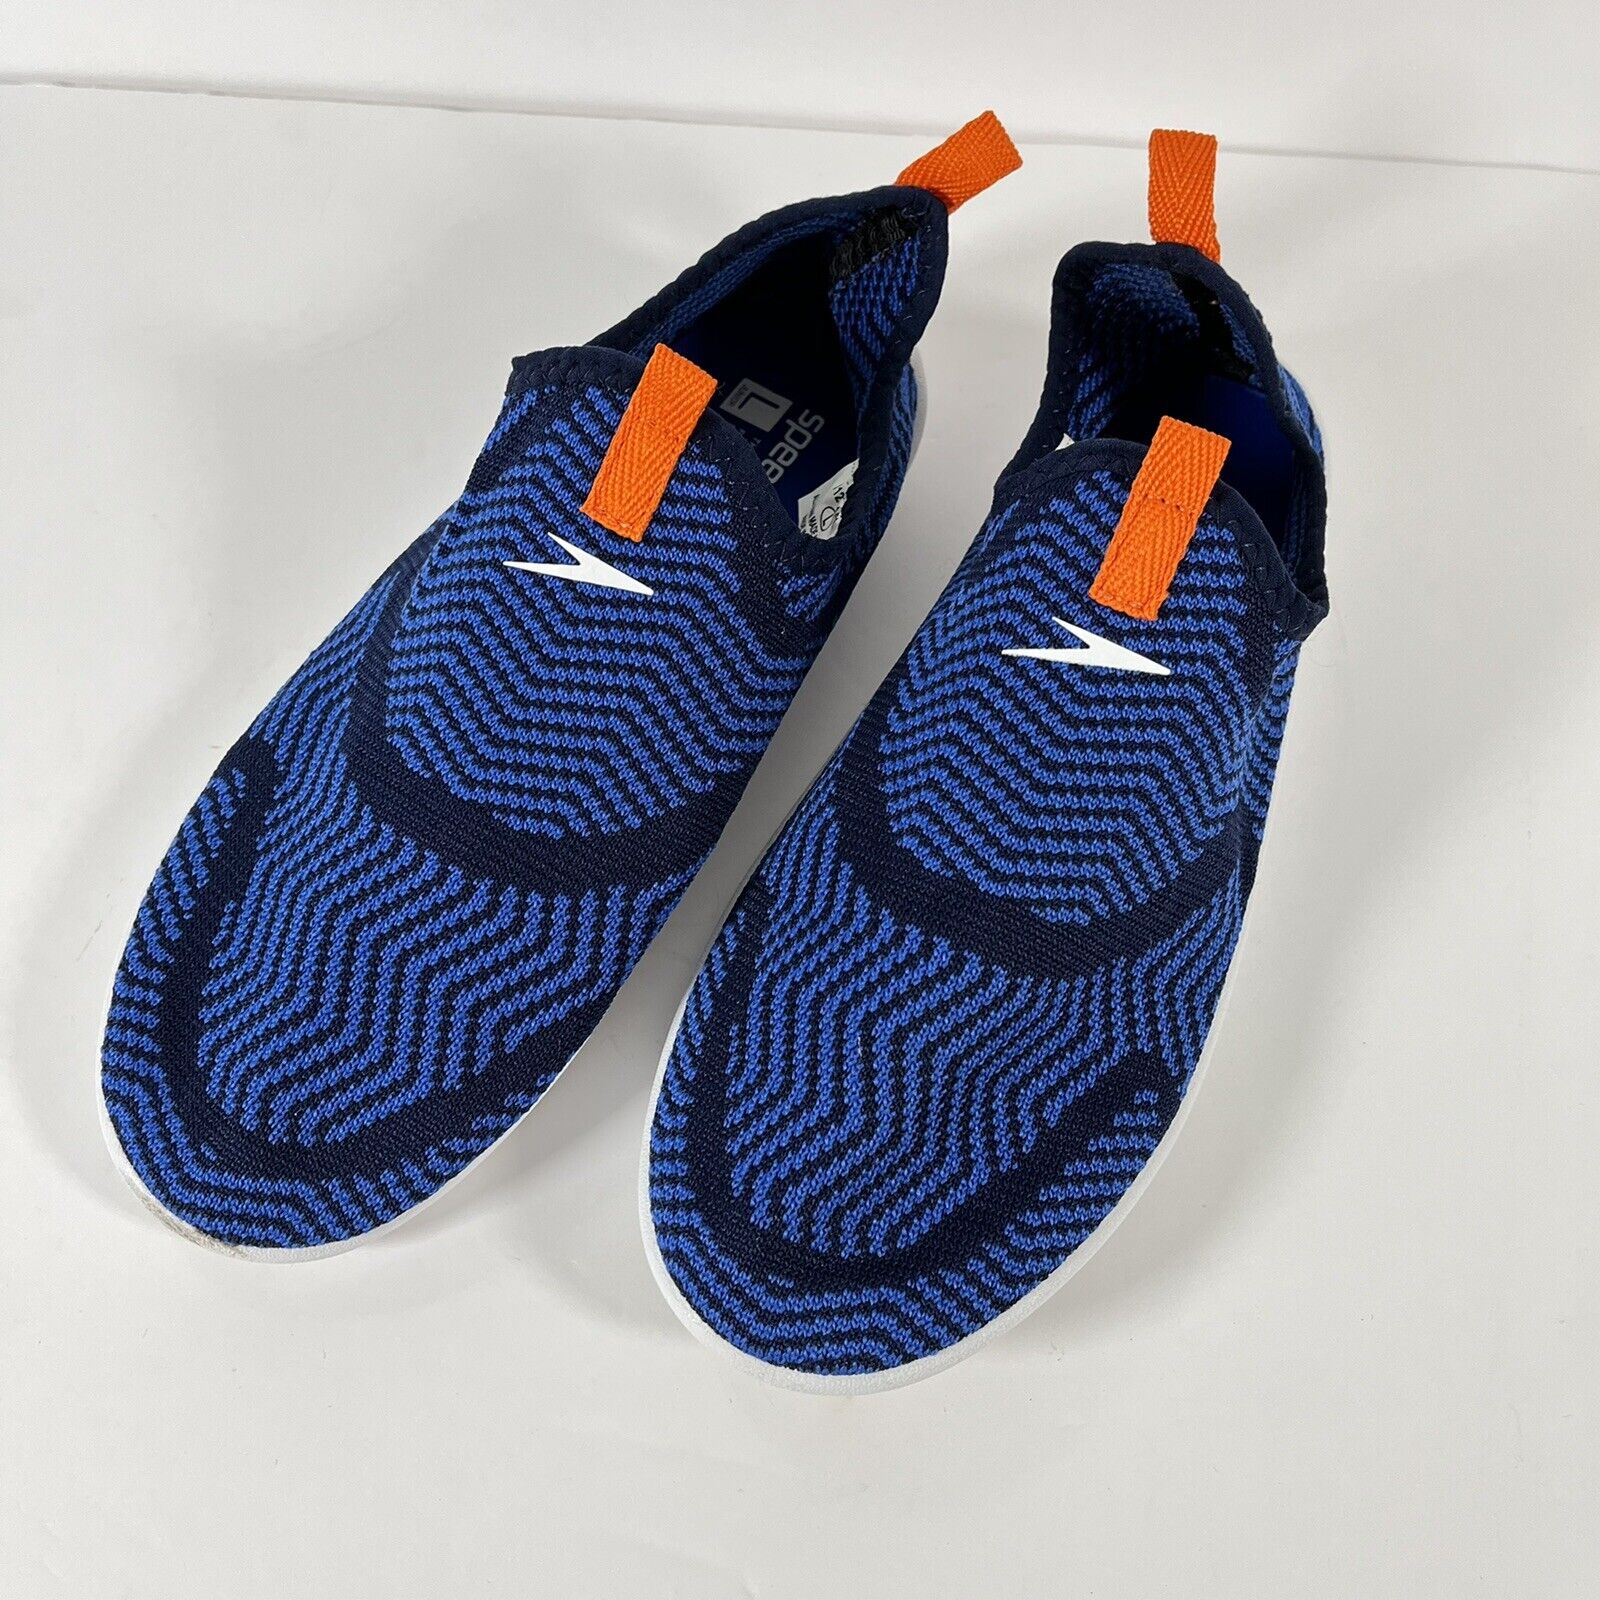 Speedo Junior Surfwalker Swim Shoes Water Shoes Size Large Junior (4/5) Blue